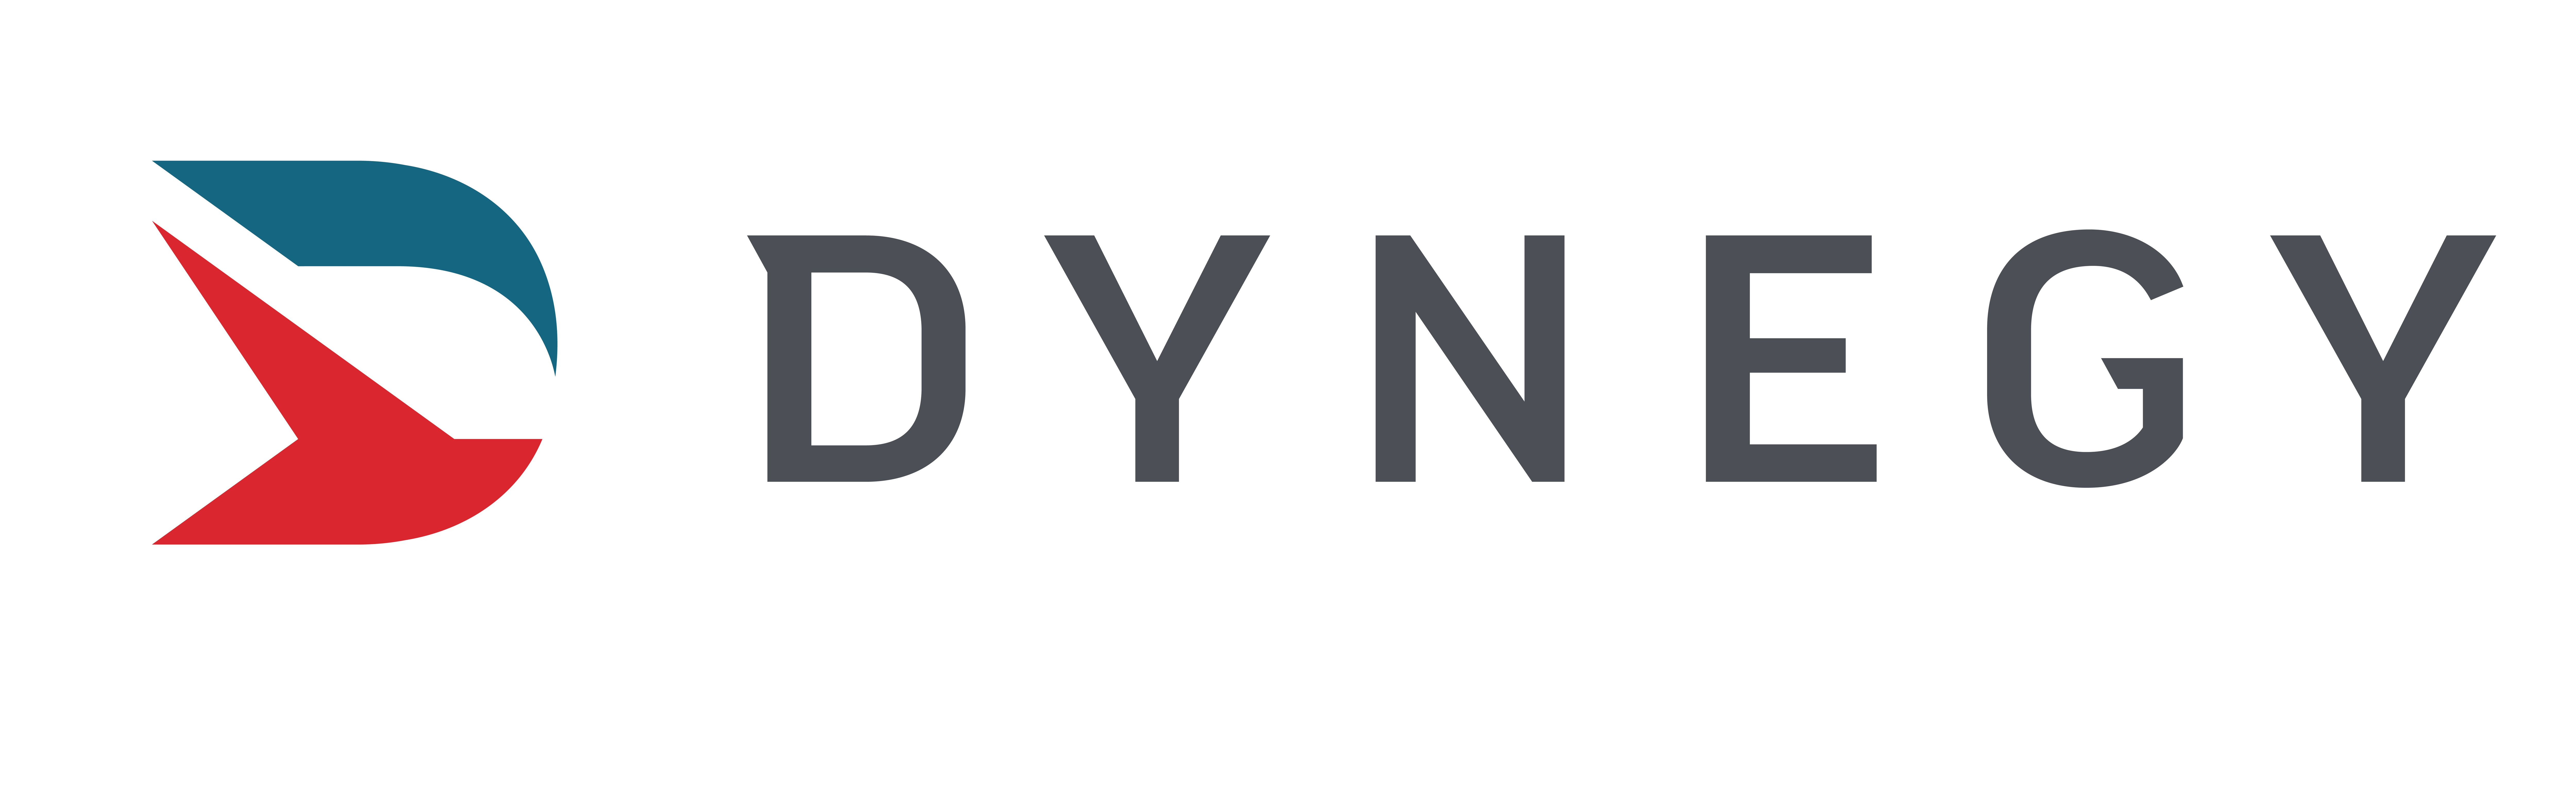 Dynegy Logo.jpg